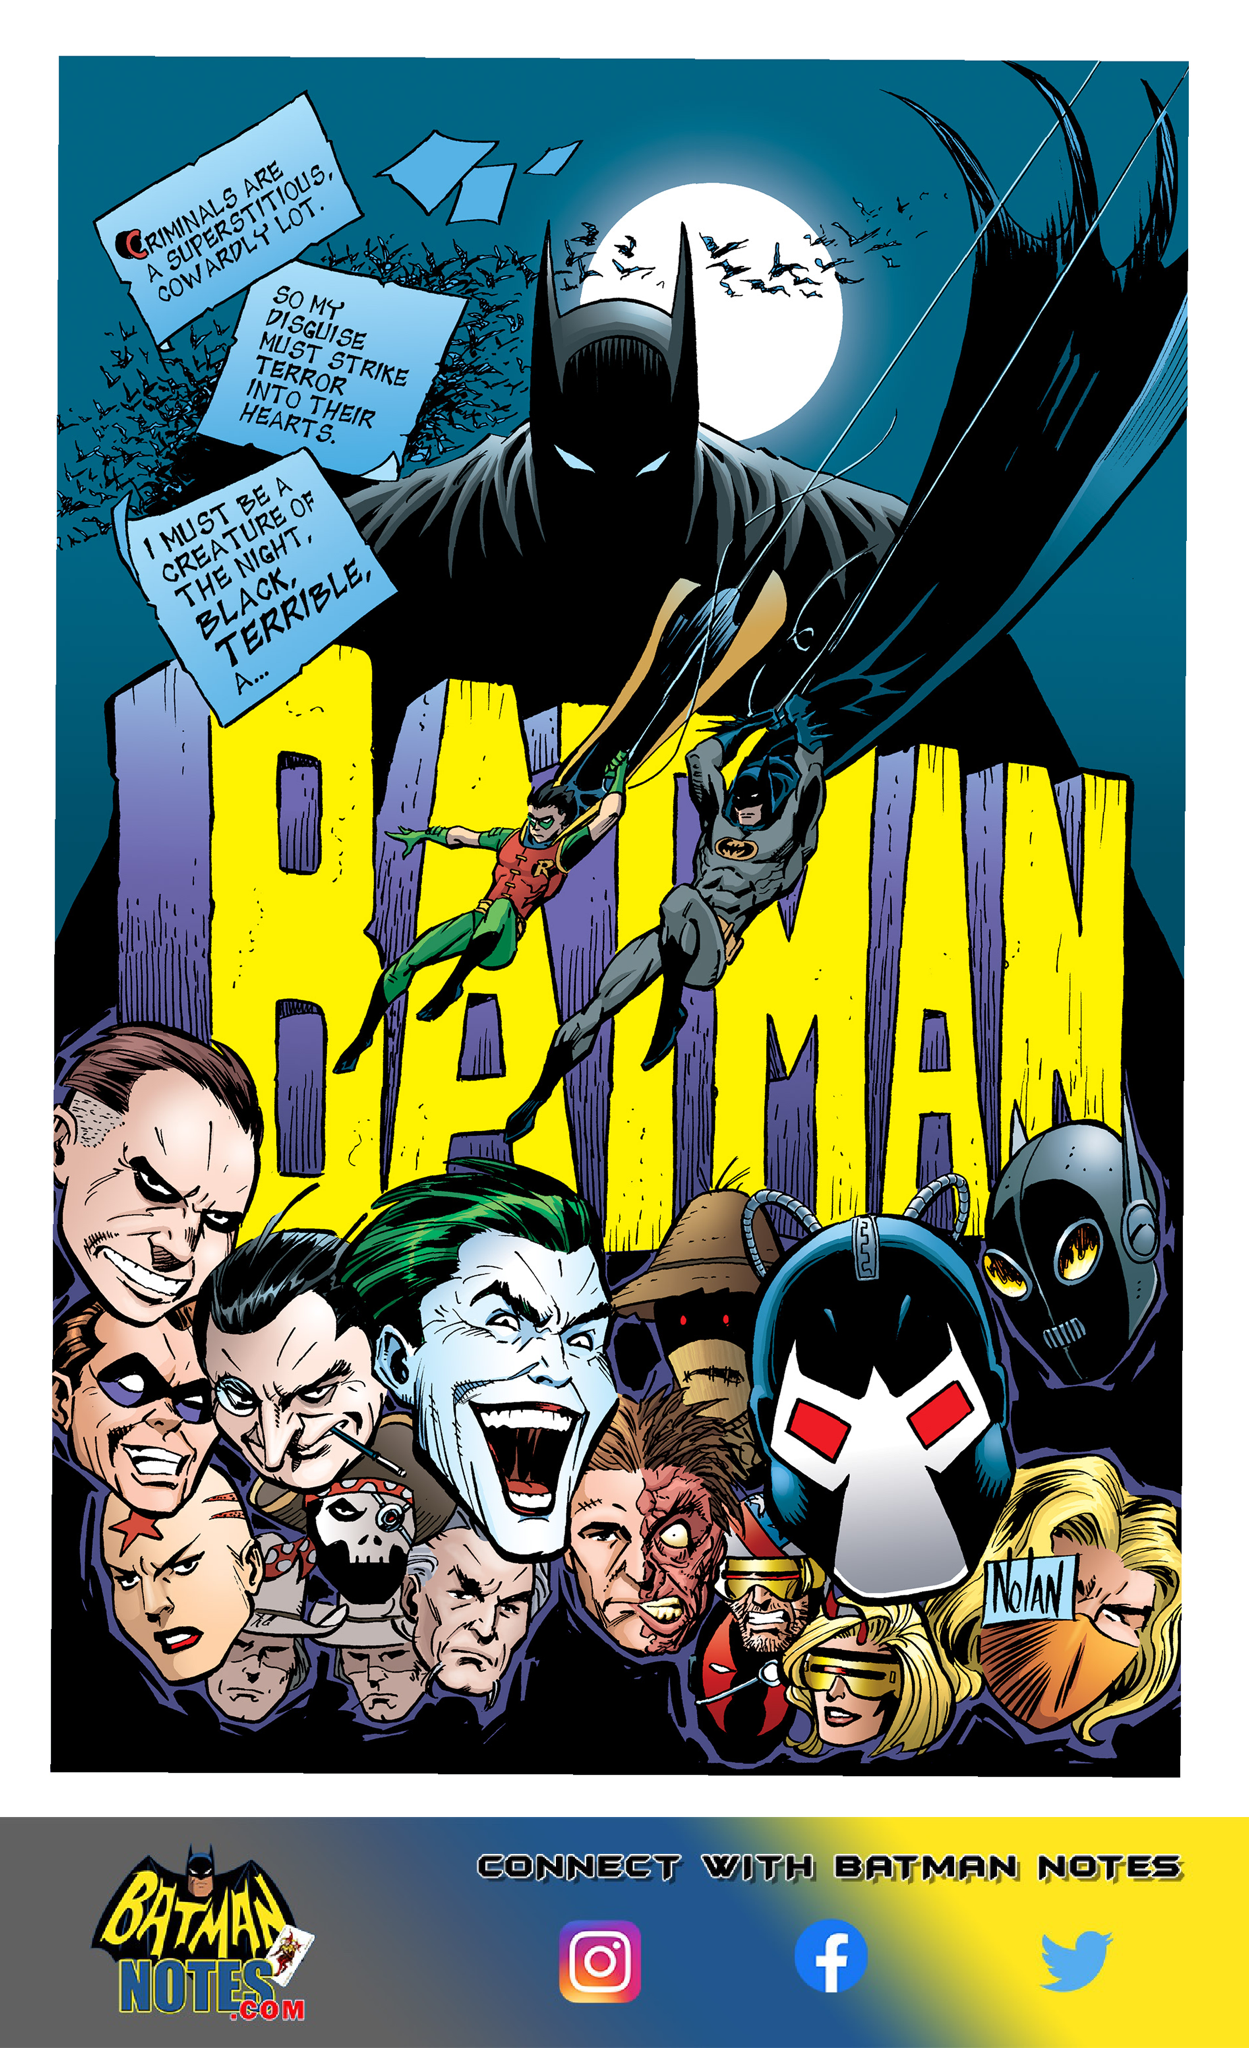 BATMAN NOTES — The World of Batman by Graham Nolan